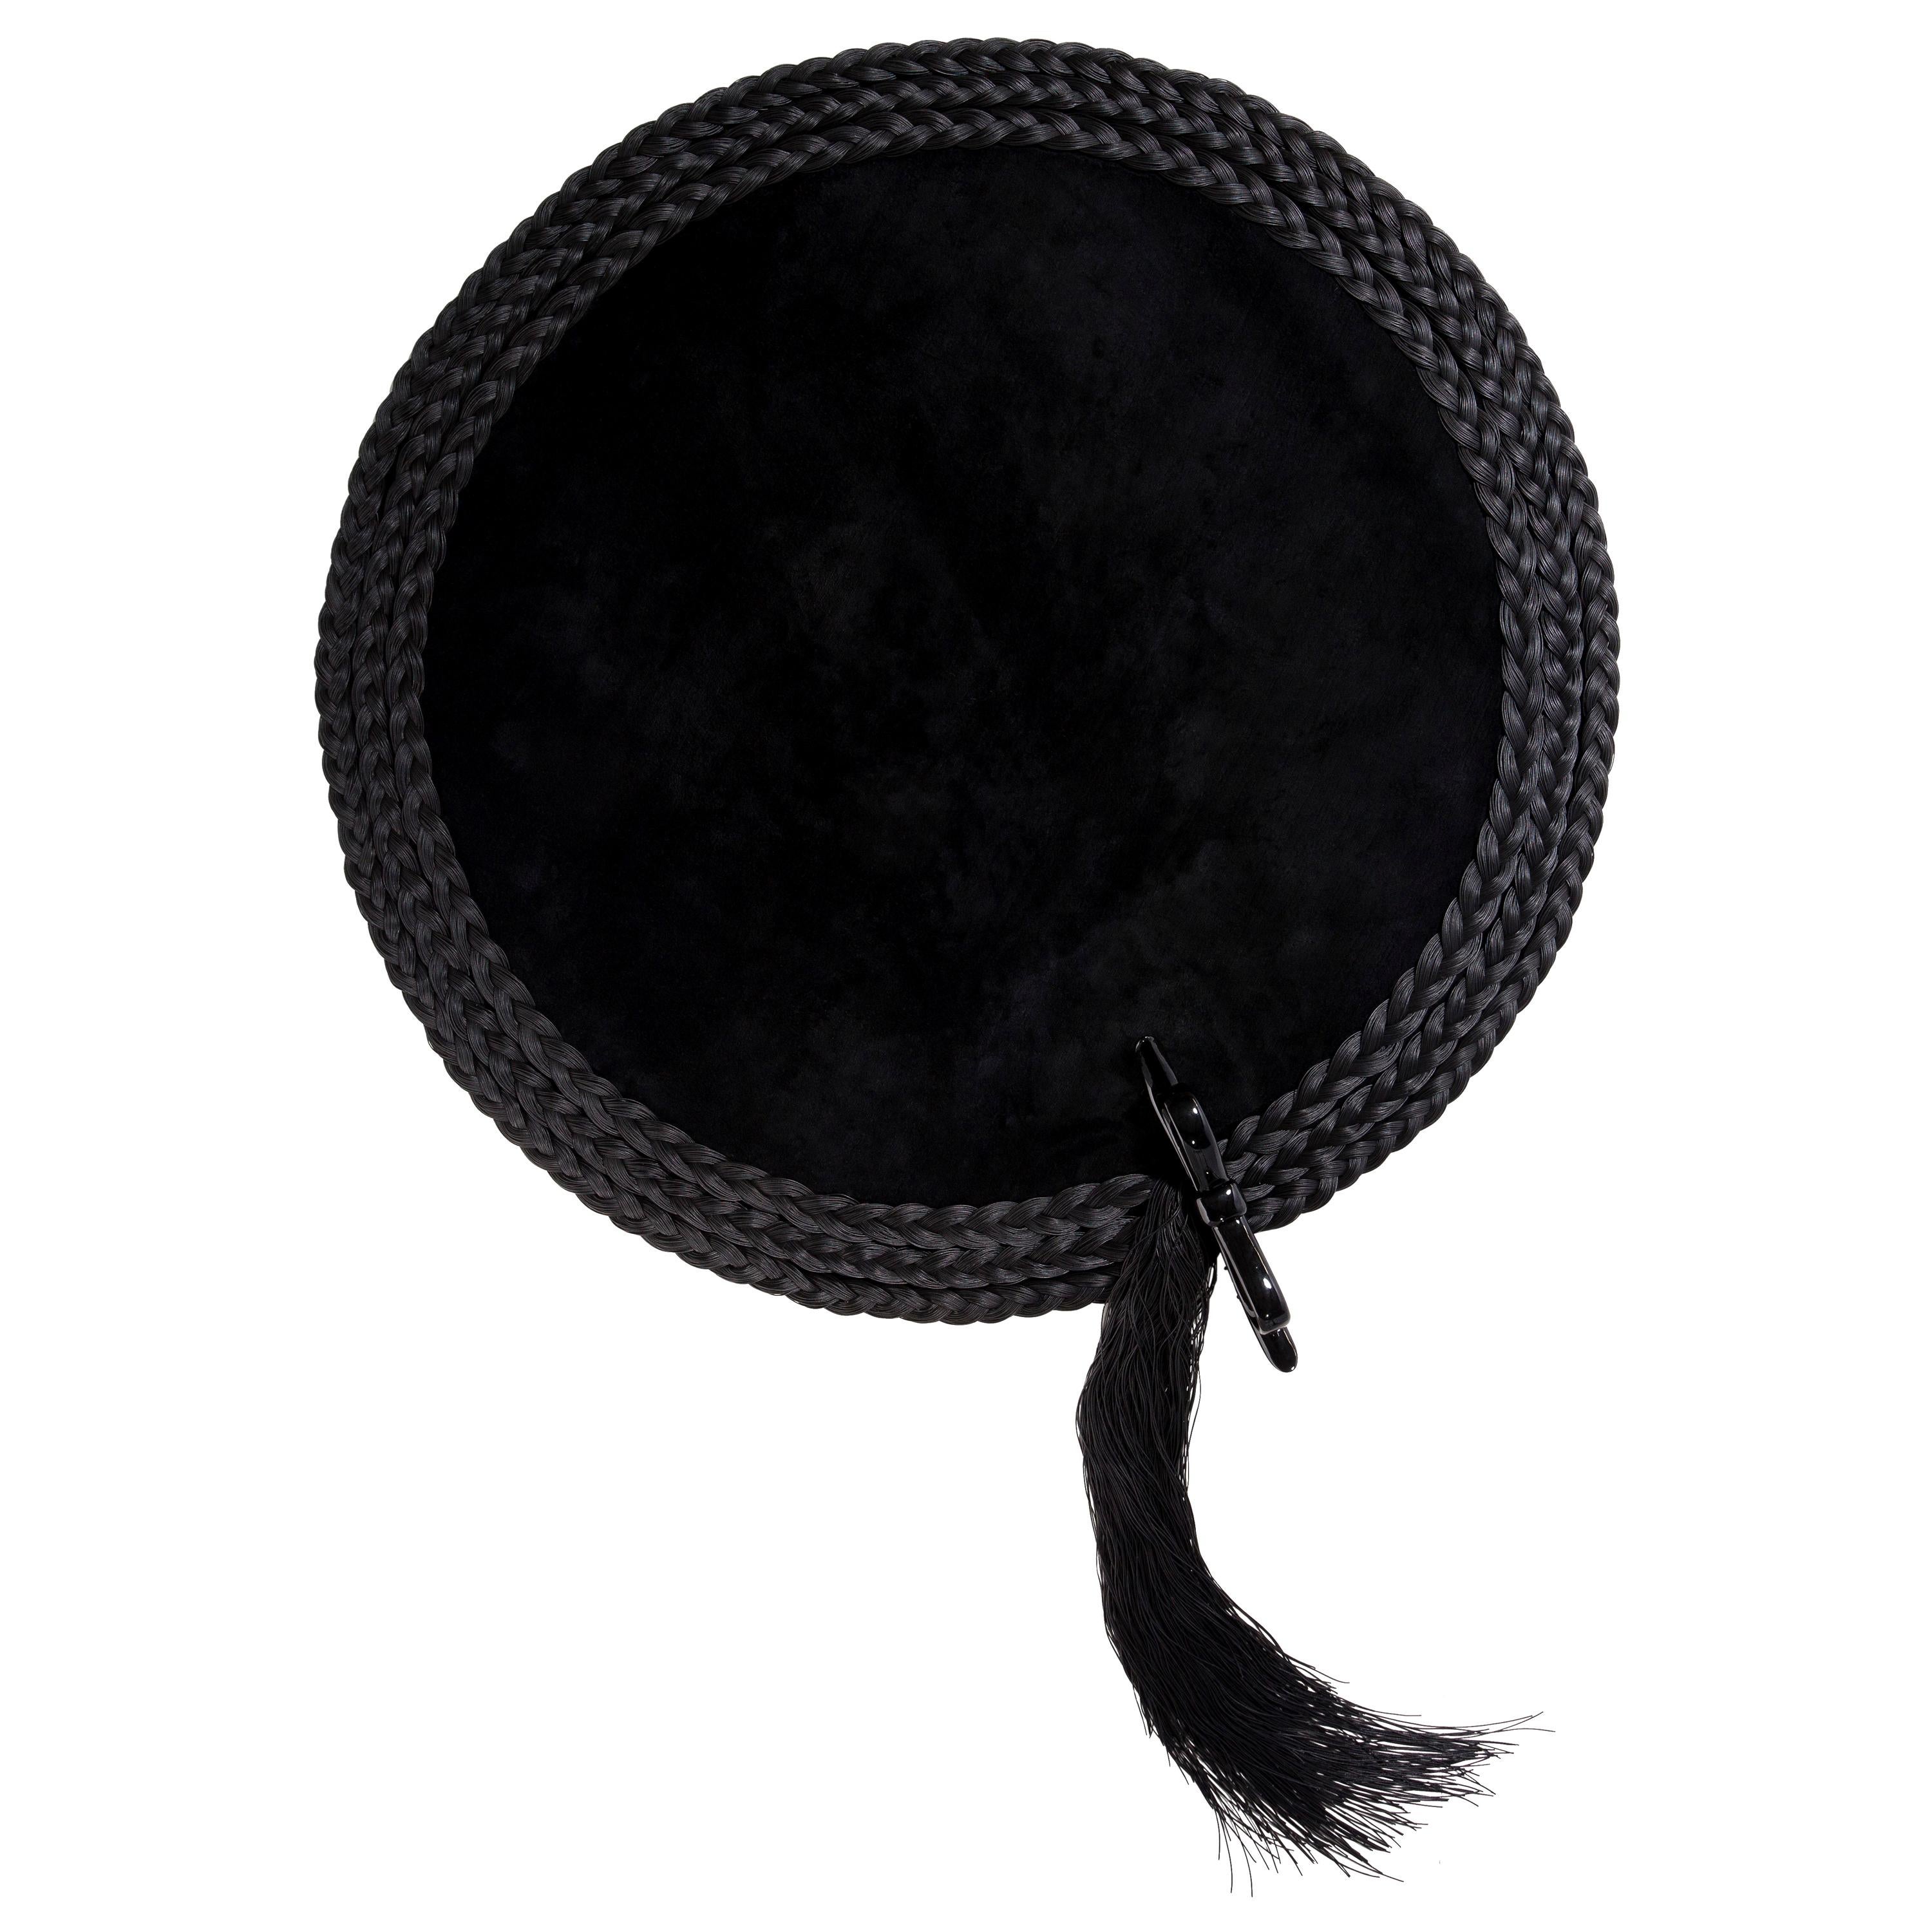 Black Tie carpet, Hand-Knot in Silk, Leather and Ceramic, 100 Kpi, Nika Zupanc